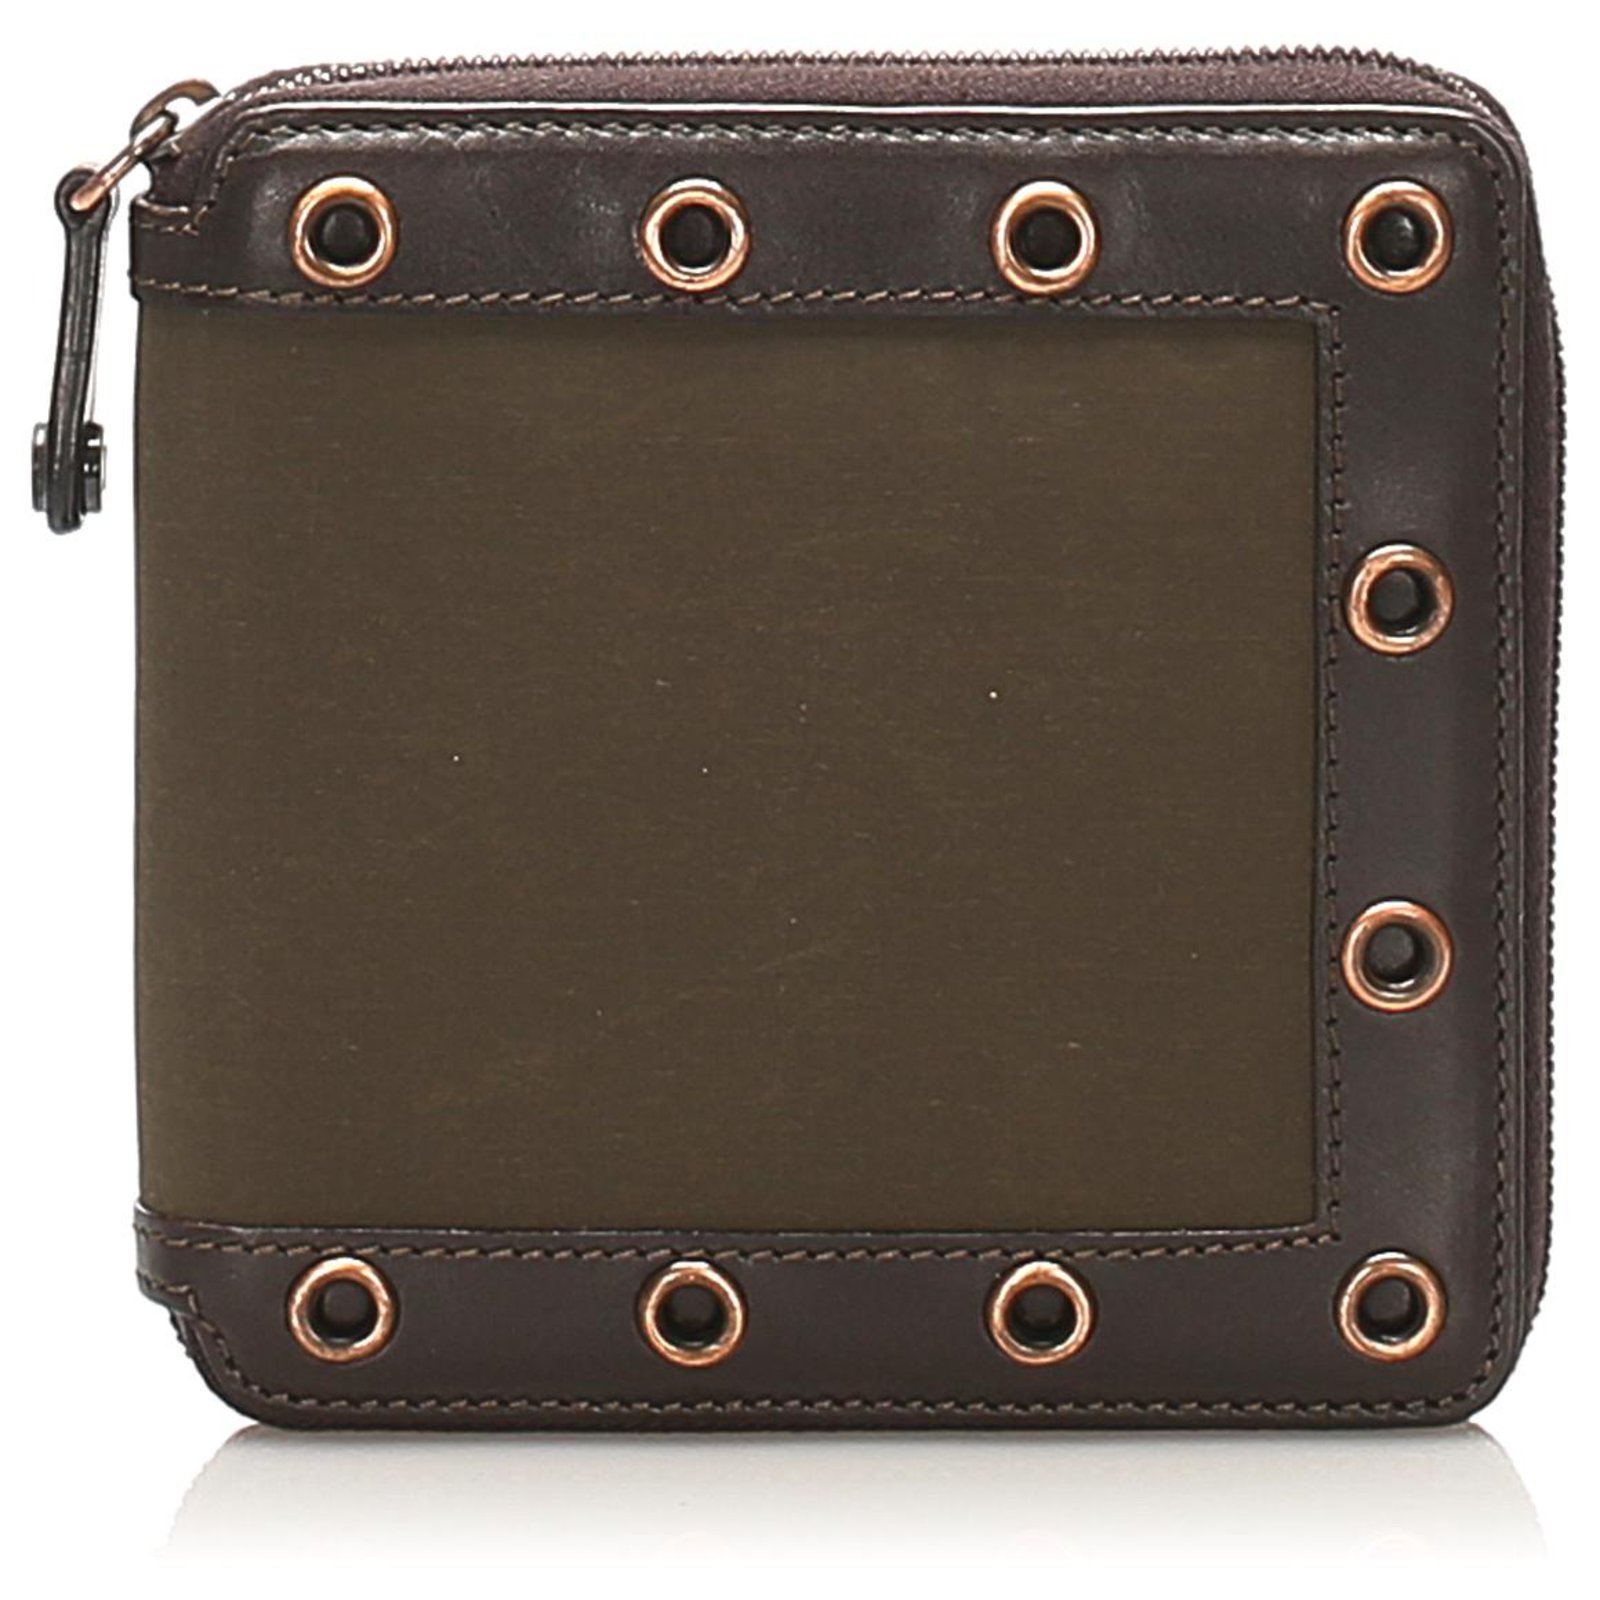 Celine Zip Around Leather Wallet